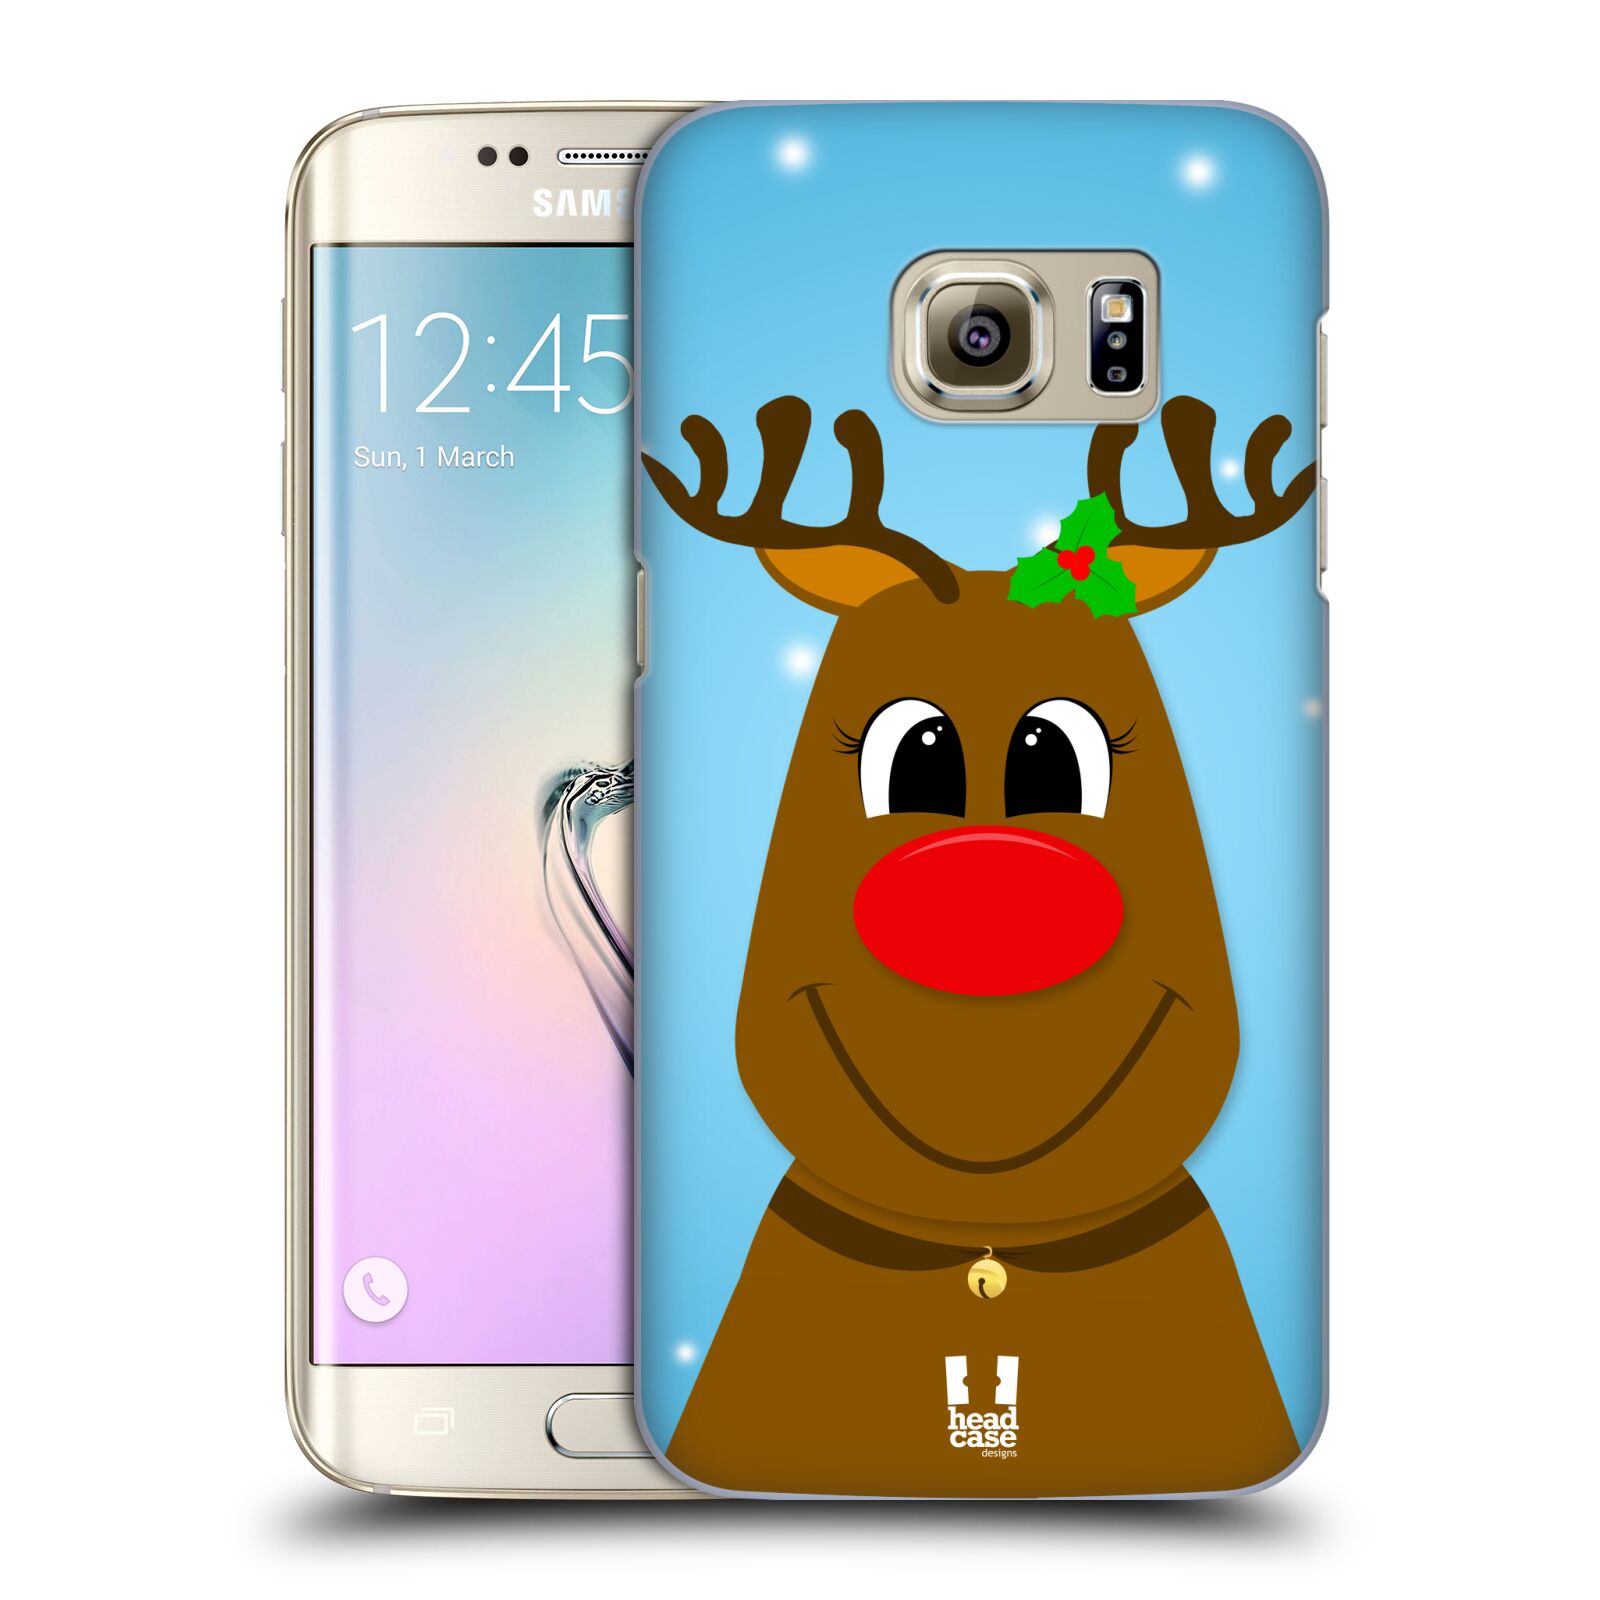 HEAD CASE plastový obal na mobil SAMSUNG GALAXY S7 EDGE vzor Vánoční tváře kreslené SOB RUDOLF